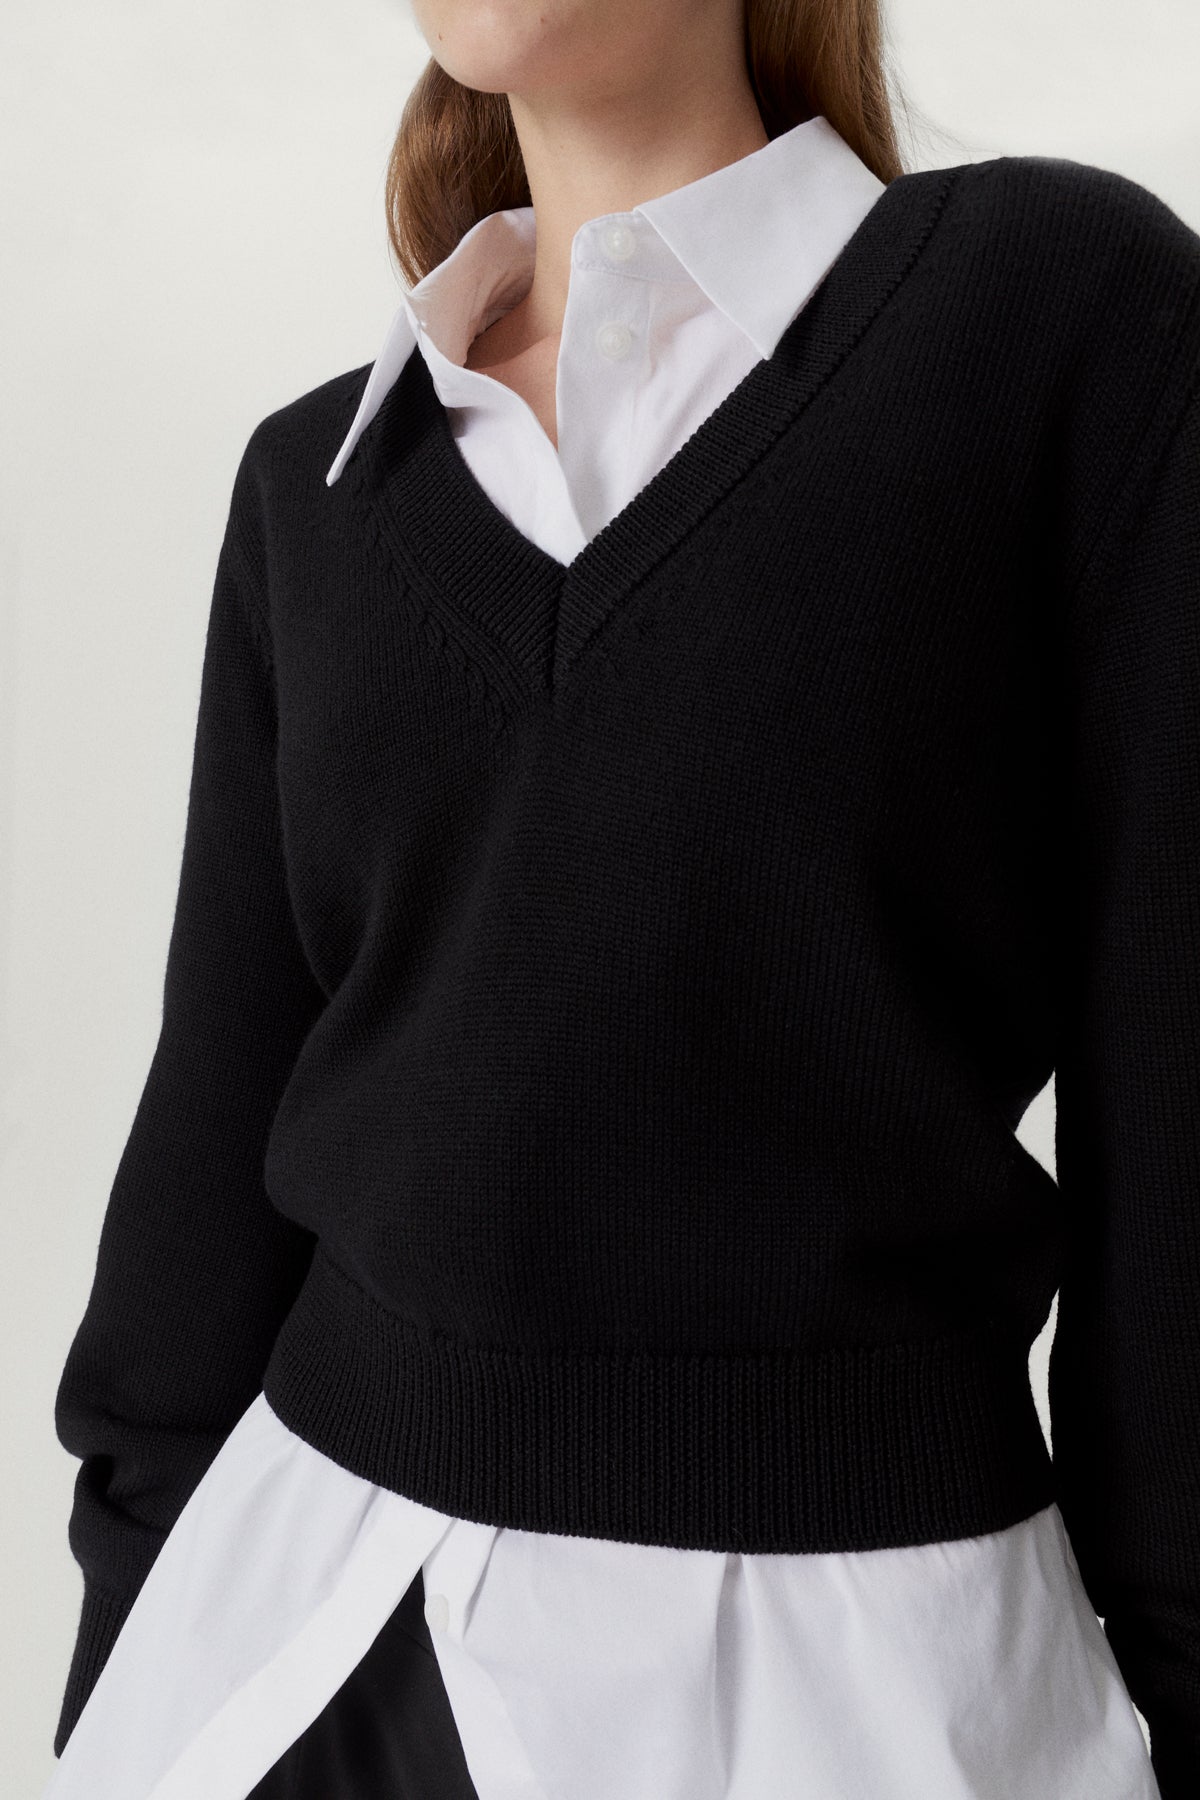 the merino wool cropped v neck black